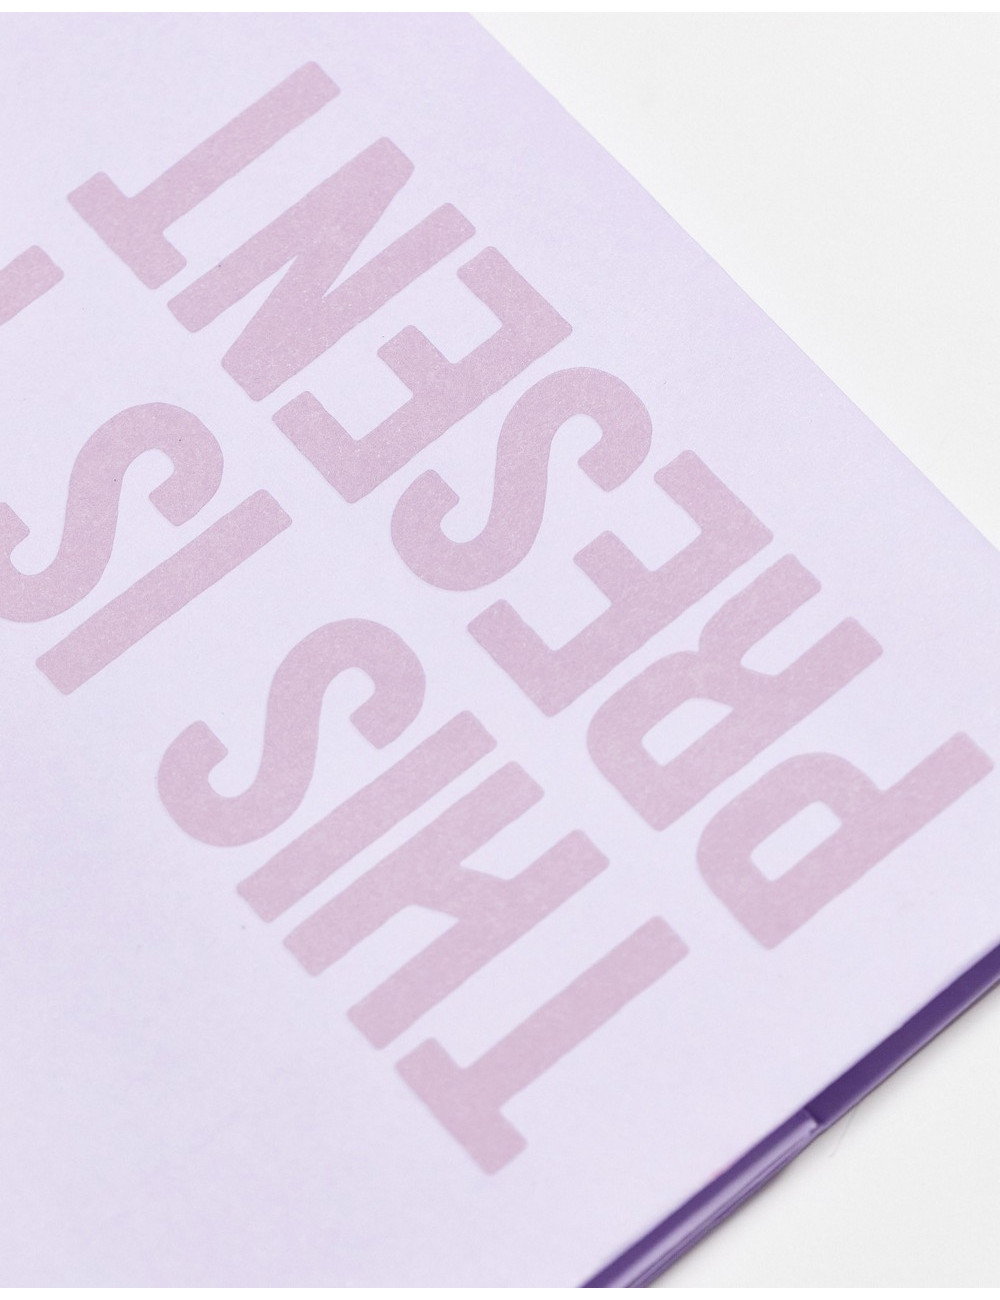 Typo medium gift bag in lilac